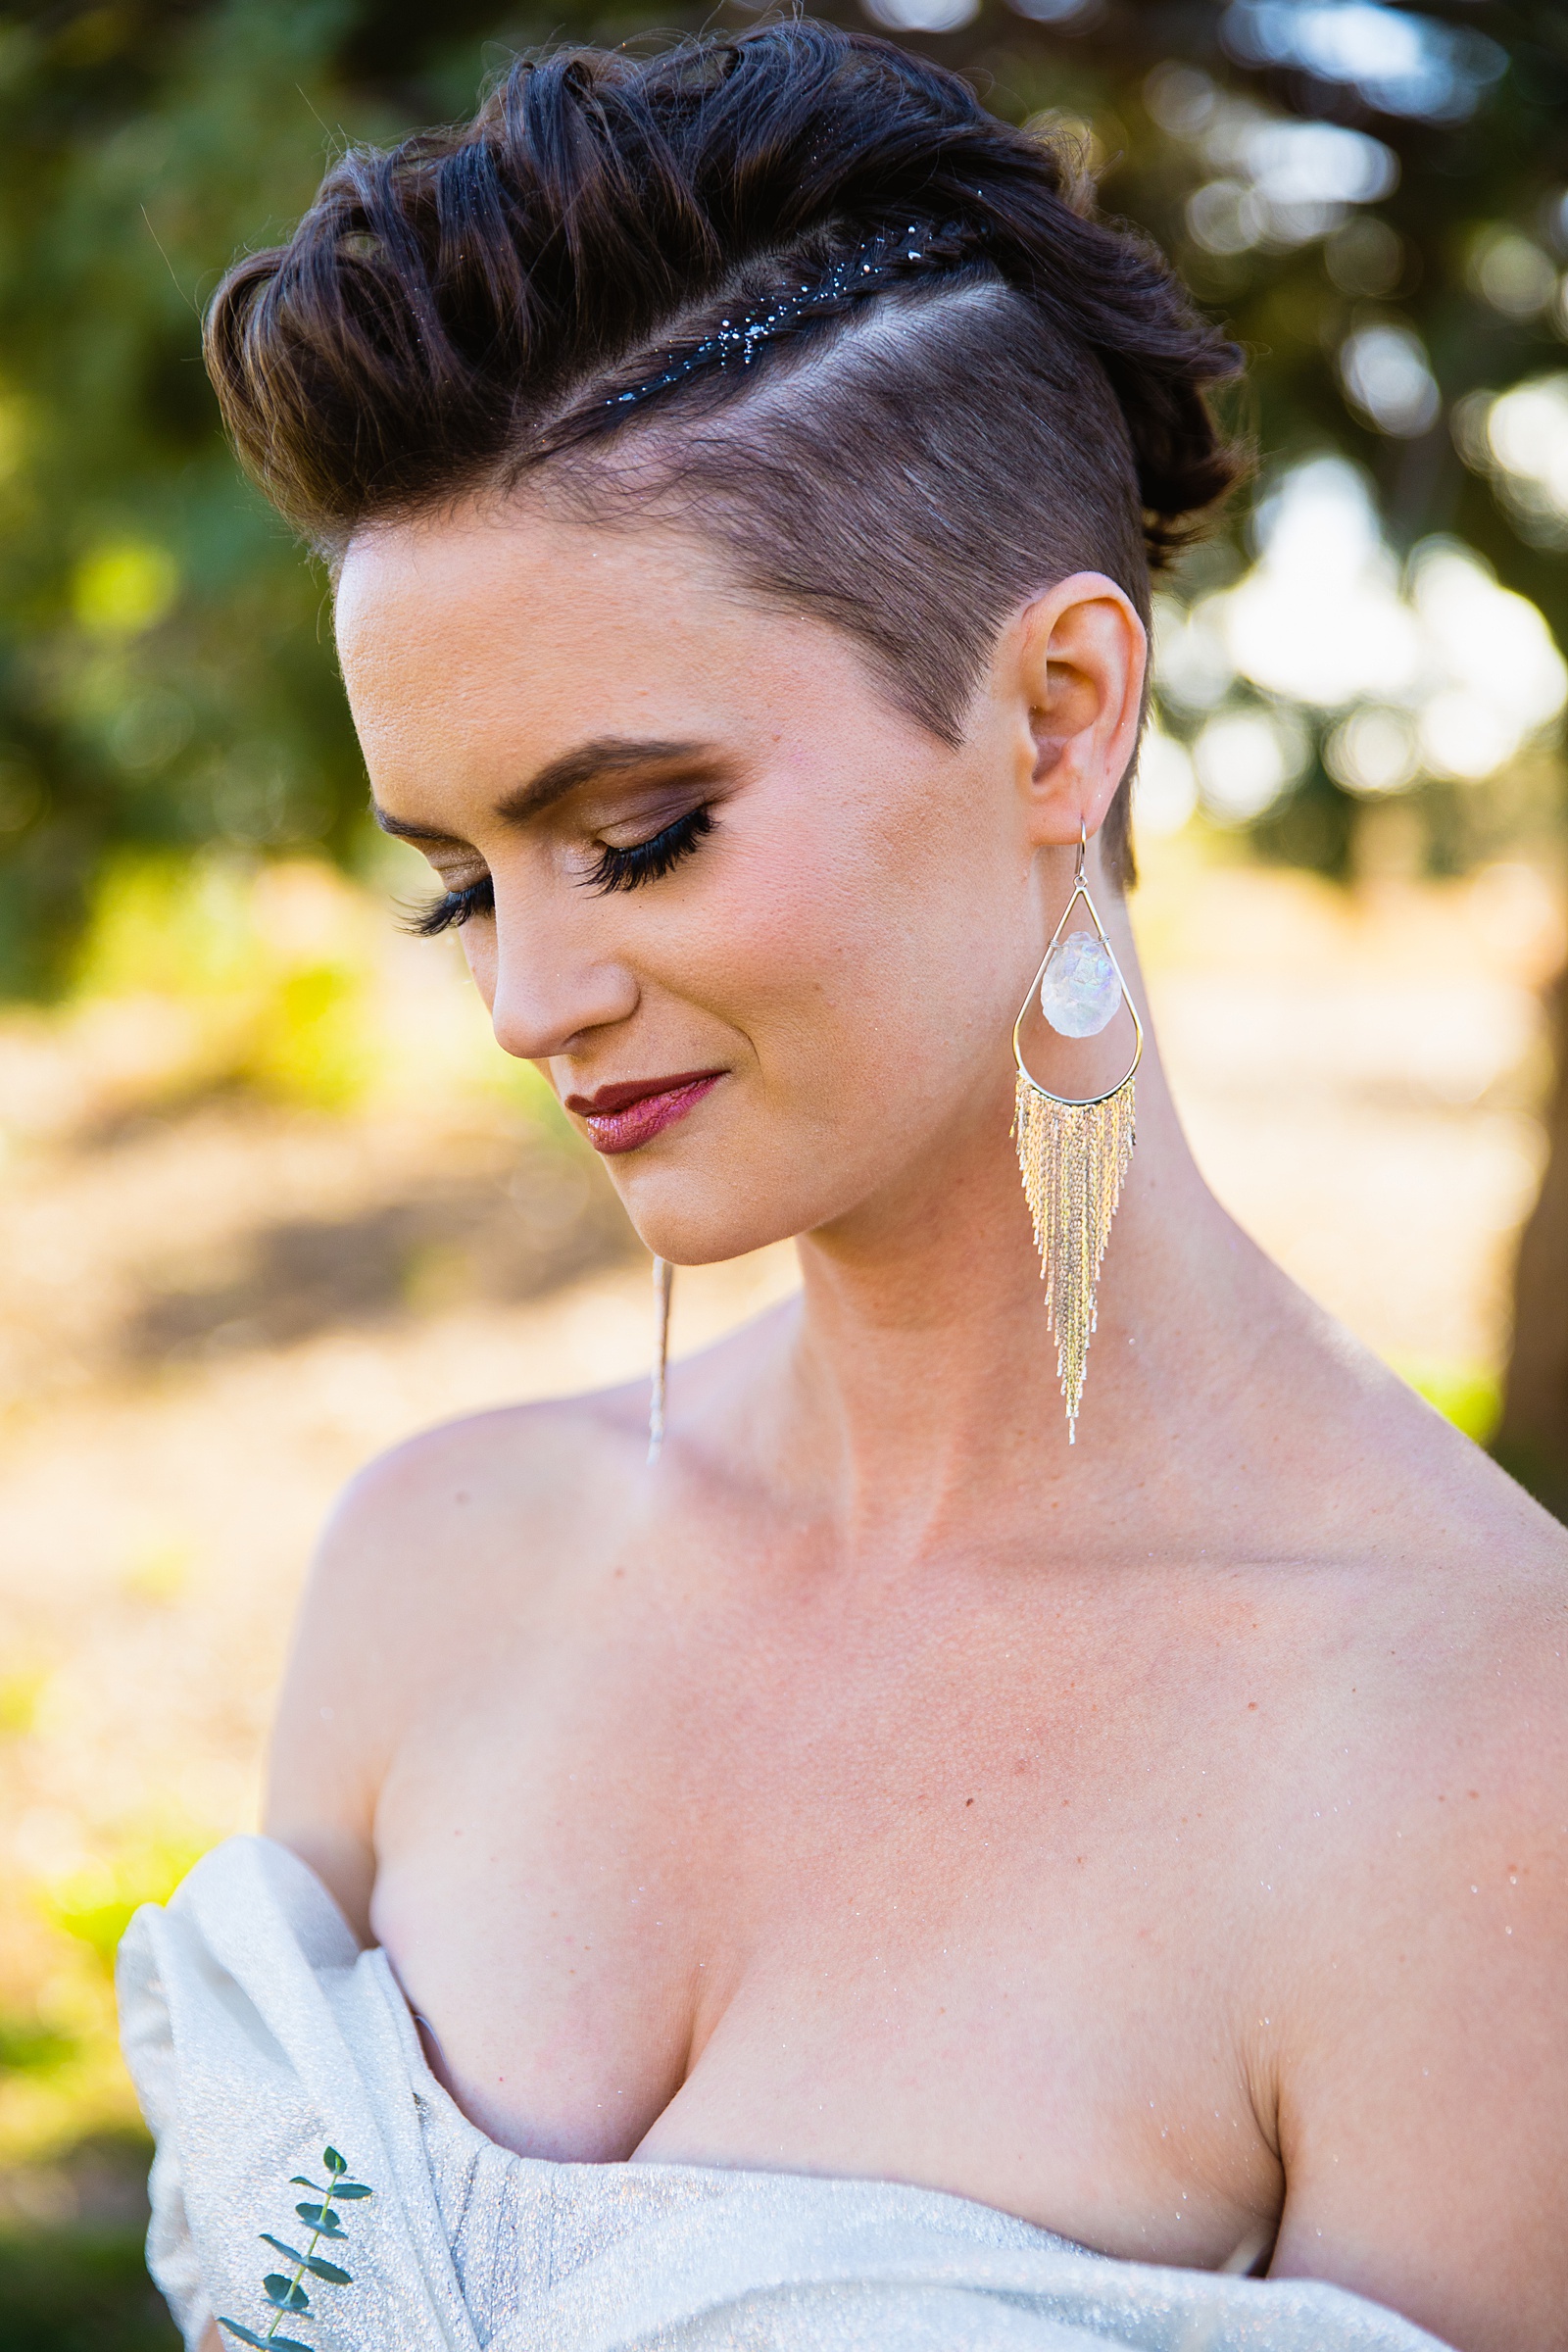 Bride's wedding day details of elegant teardrop crystal earrings by PMA Photography.